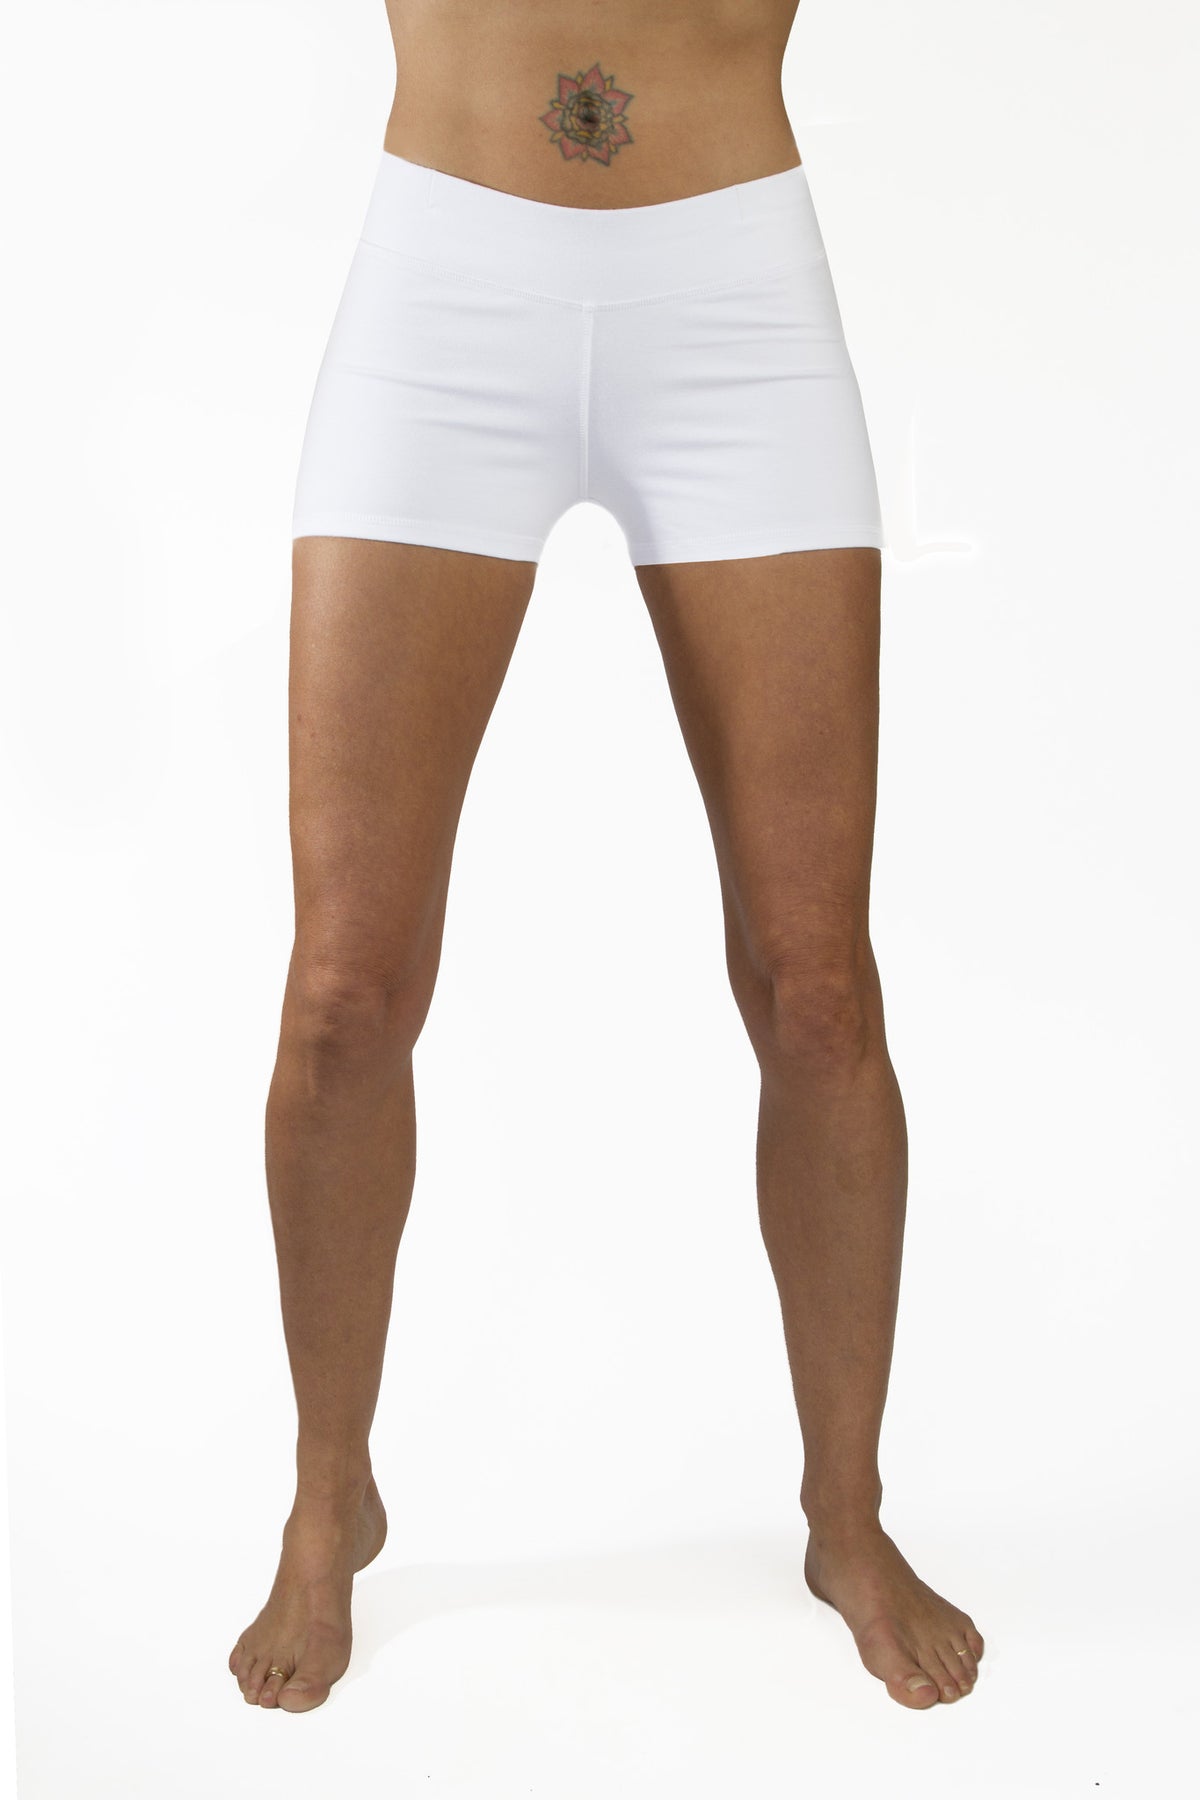 Yoga Hotpants - White - Beach Shorts - FUNKY SIMPLICITY